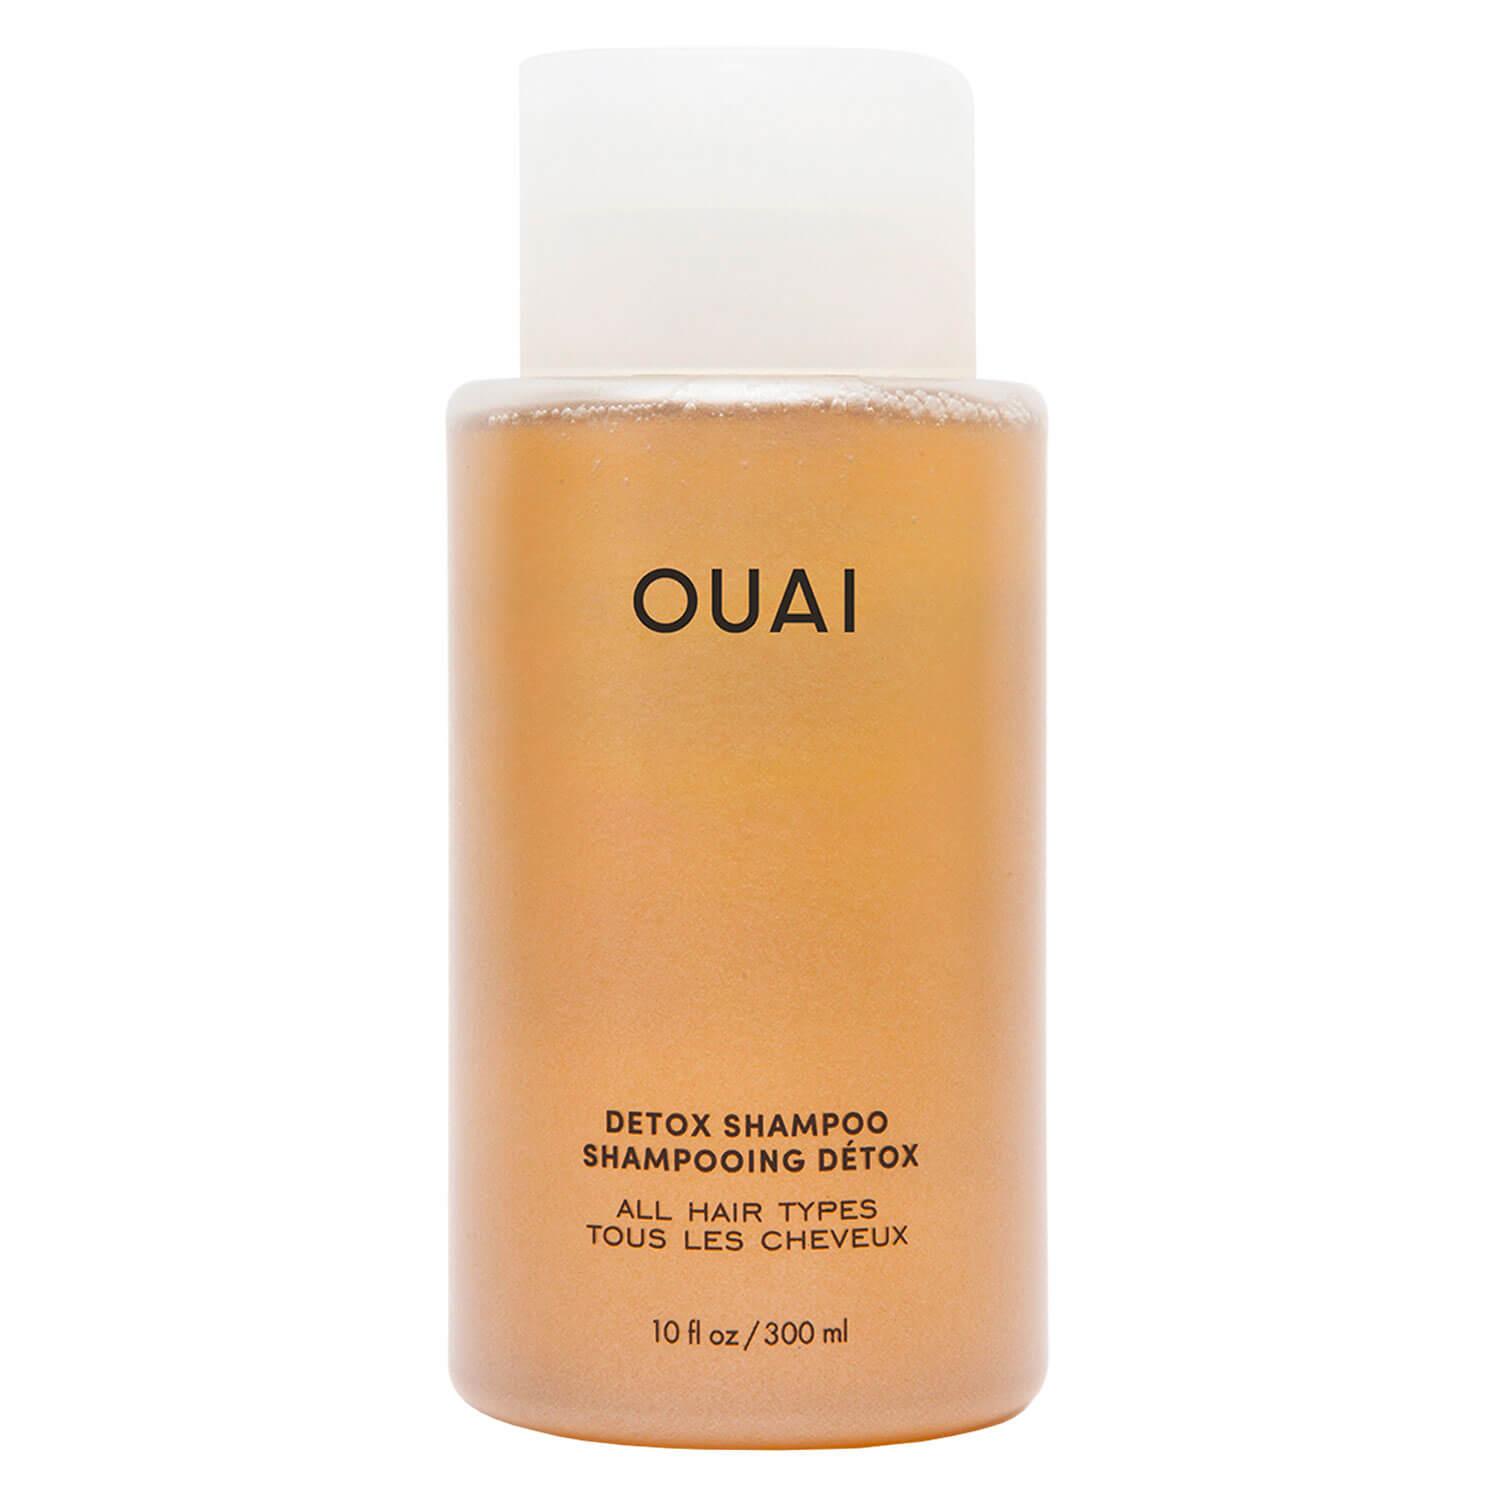 OUAI - Detox Shampoo